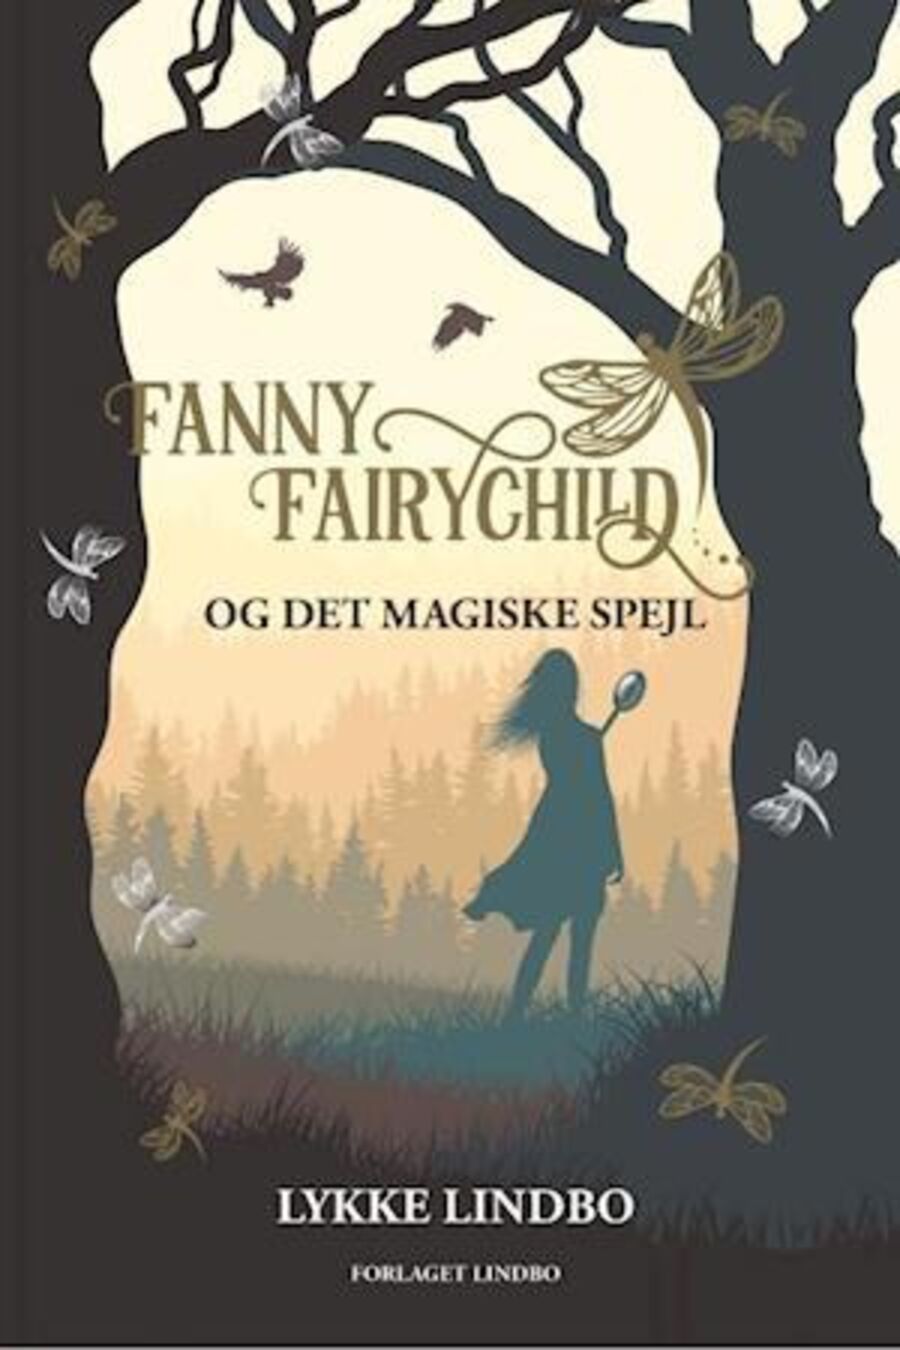 Fanny Fairychild